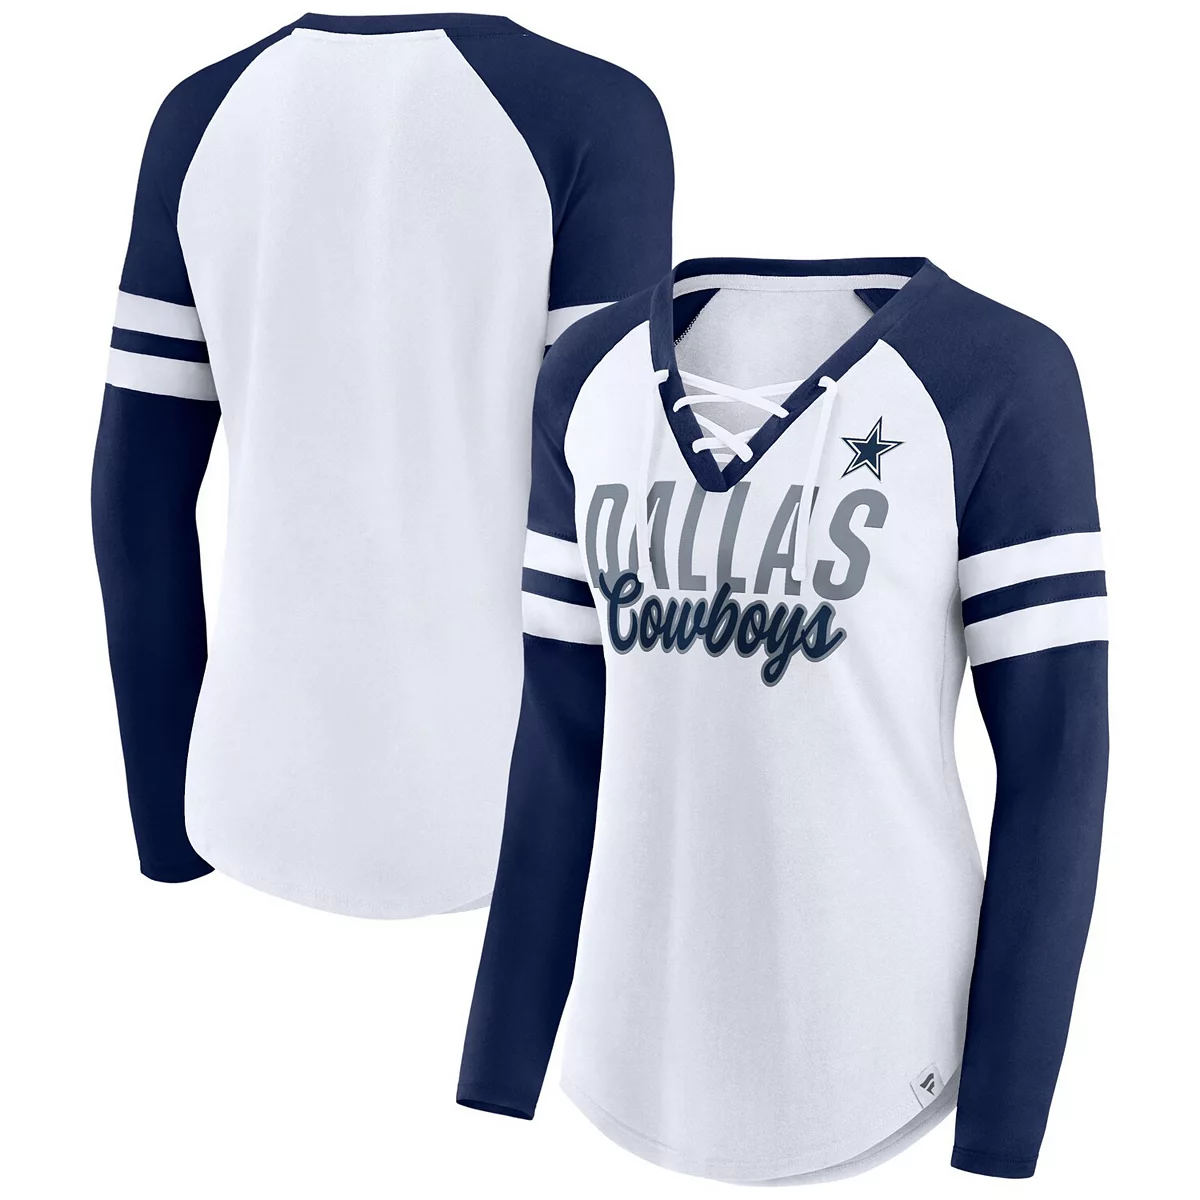 Genuine Merchandise Baseball Jersey Women's Large Blue Philadelphia  Phillies